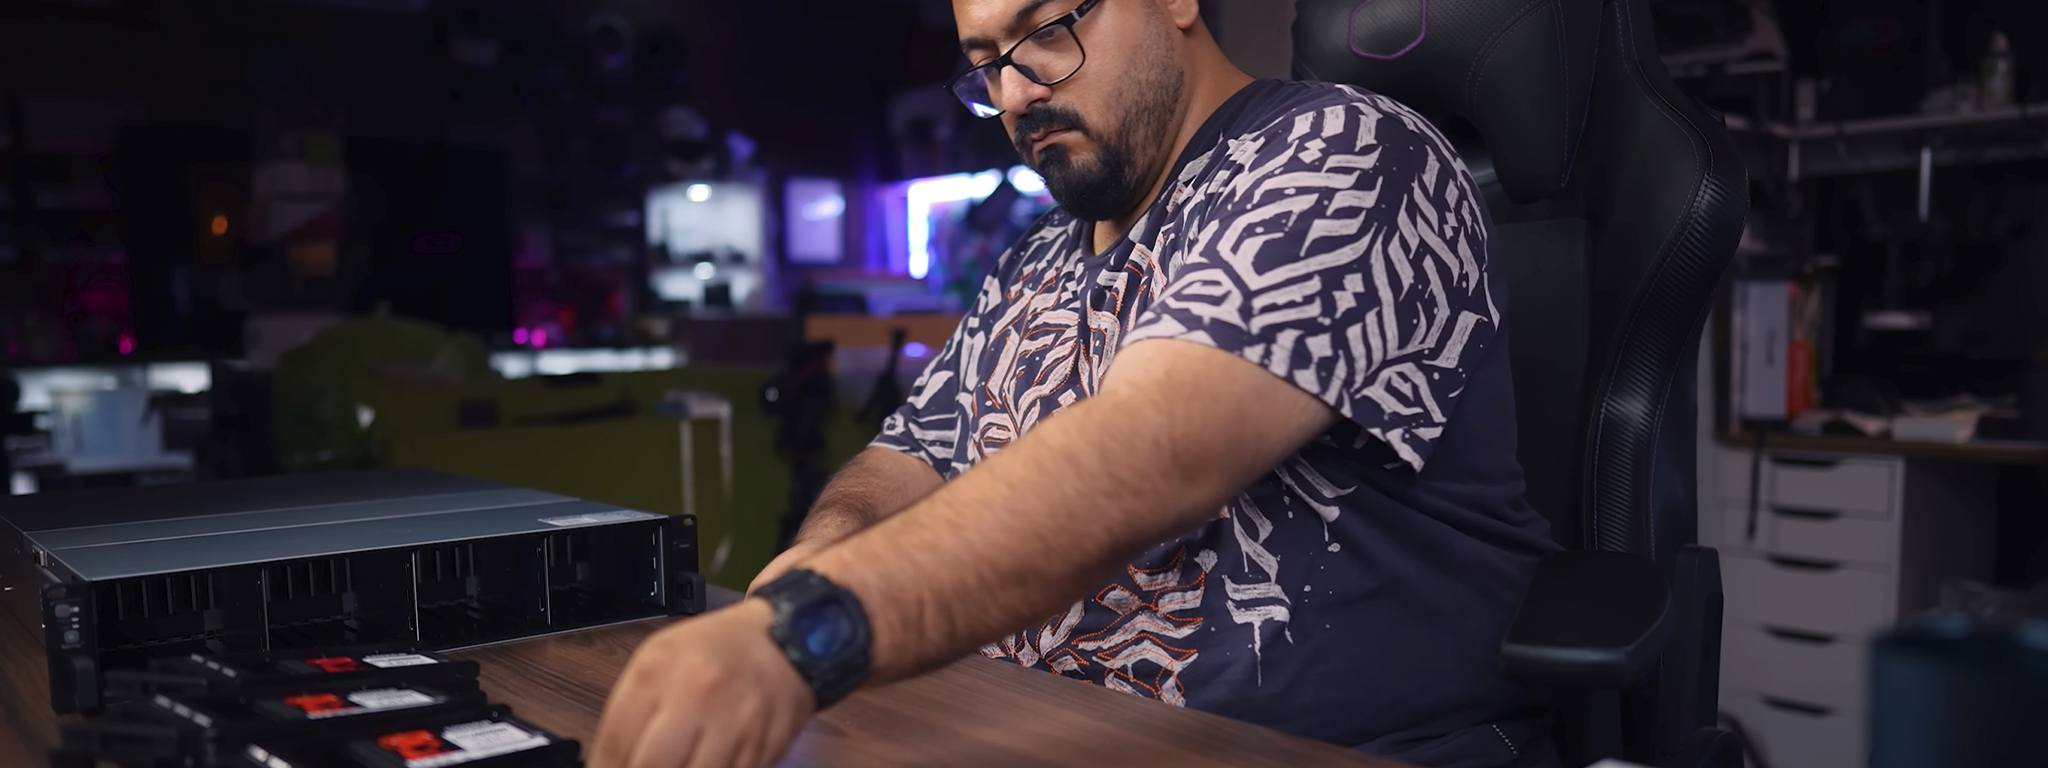 Salah Hamed - Android Basha 的網紅 - 正在他桌上的伺服器機架上安裝 DC600M SSD 固態硬碟